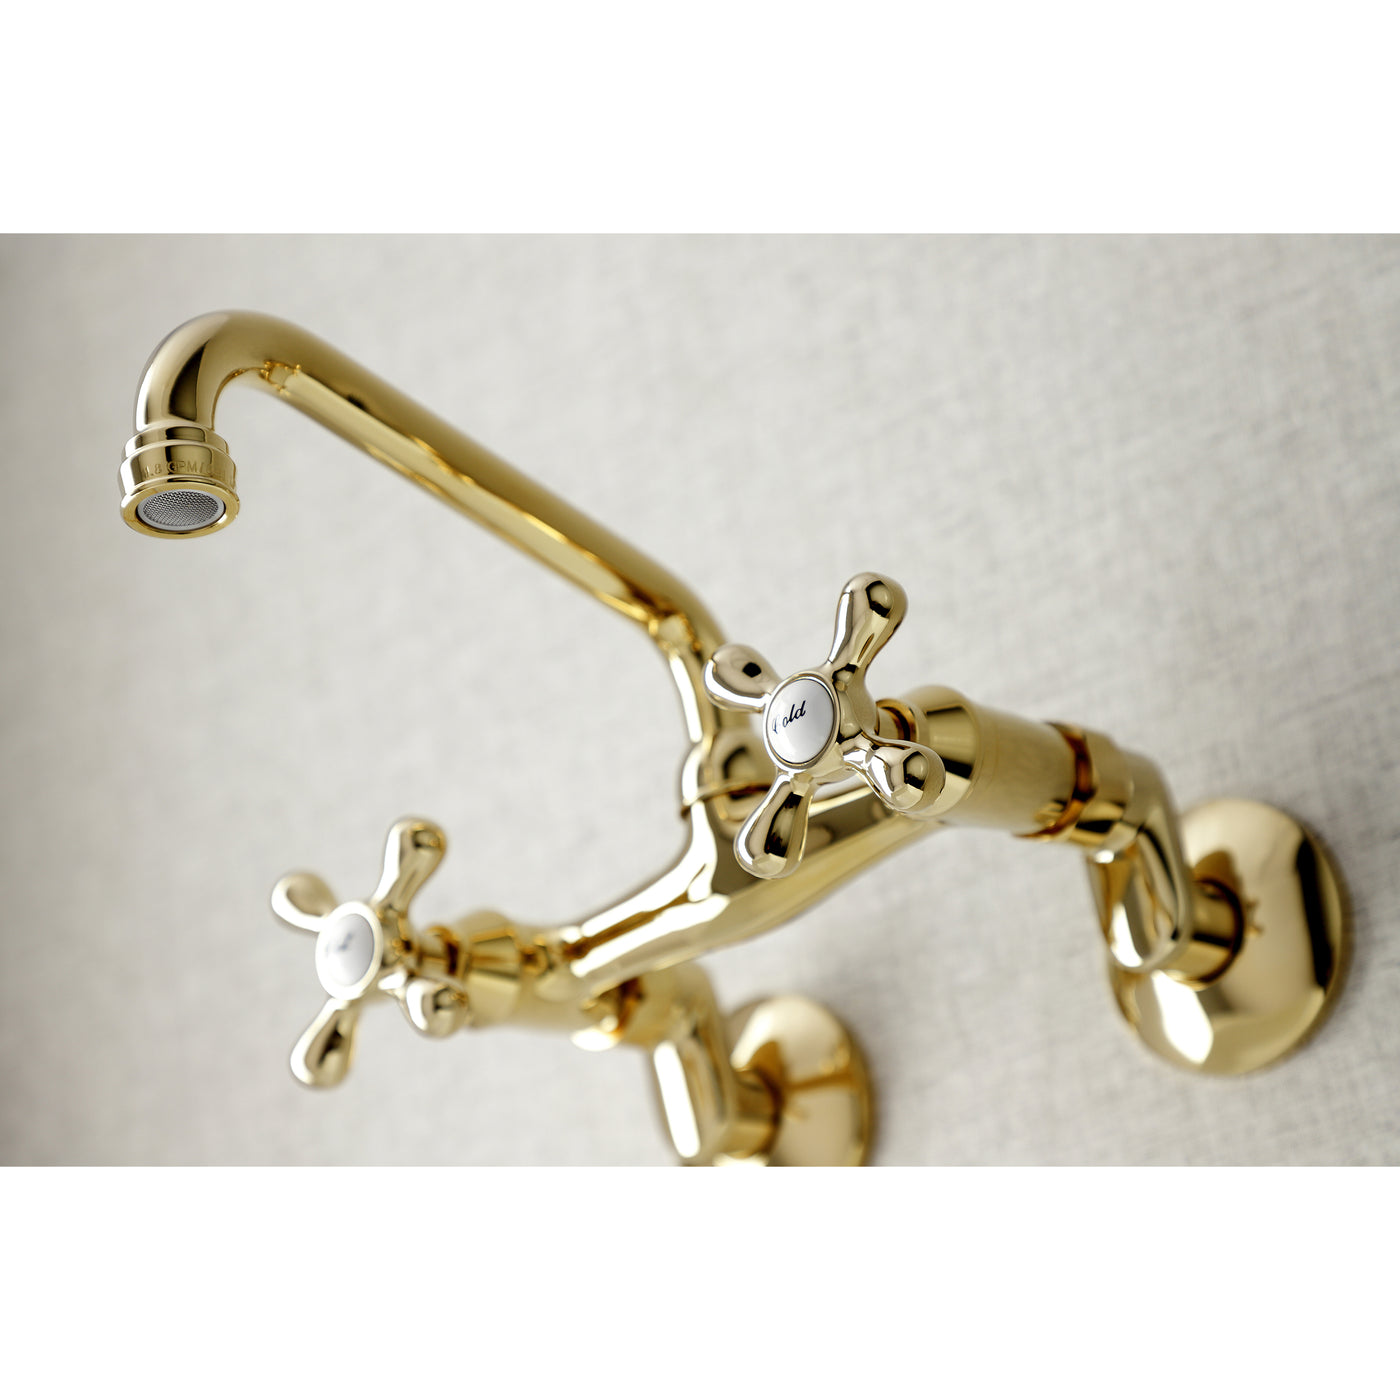 Elements of Design ES2132X Adjustable Center Wall Mount Kitchen Faucet, Polished Brass